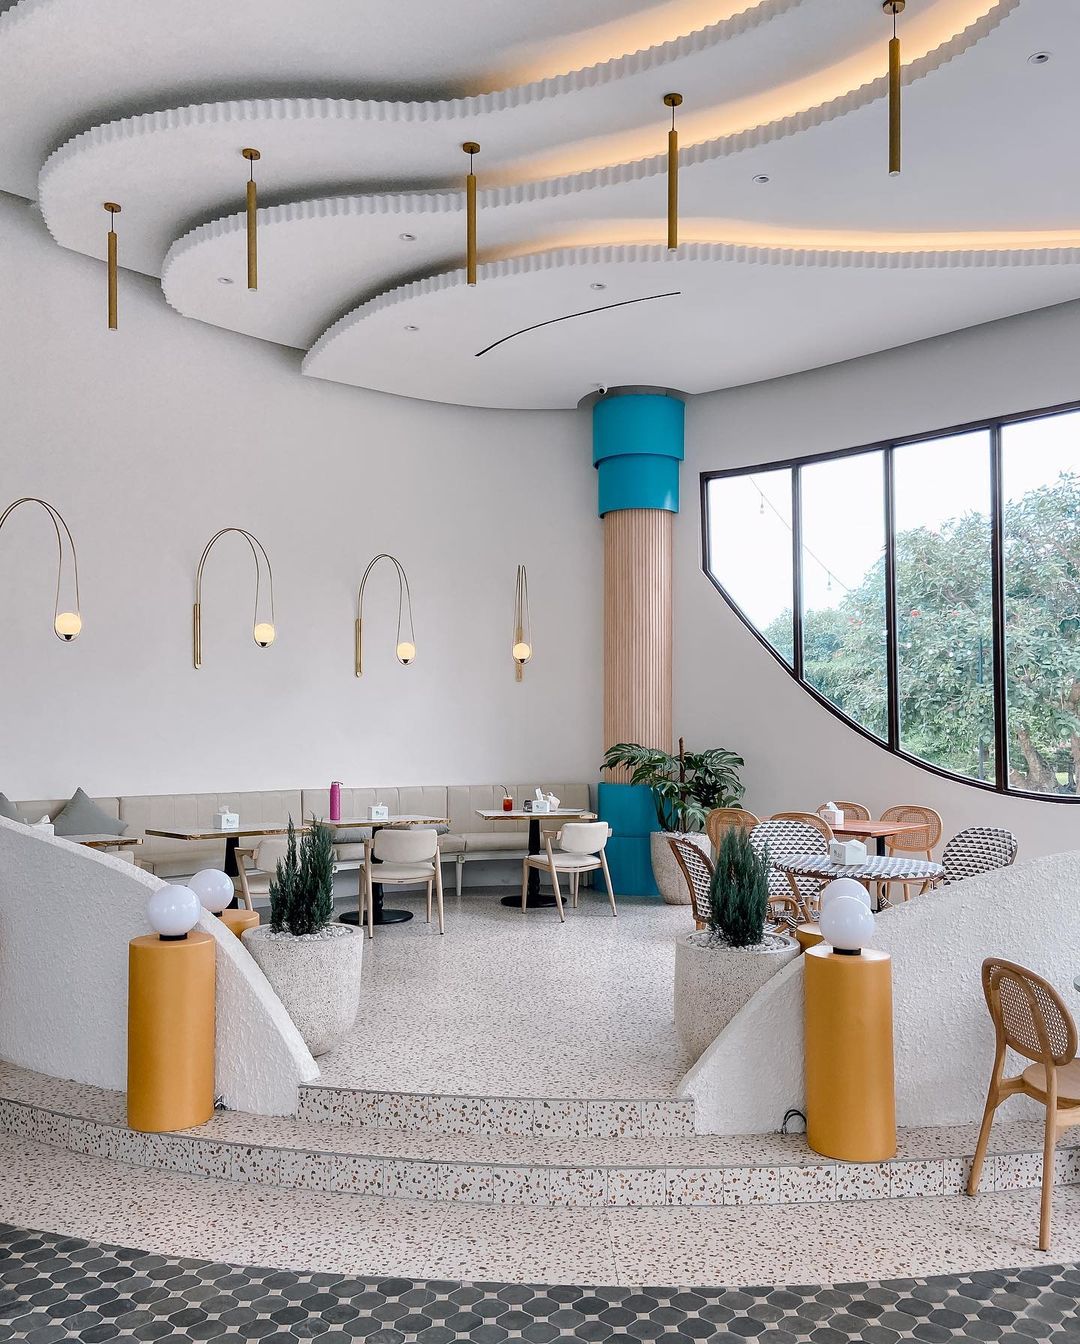 Lokasi Dovers Cafe Lounge Medan Image From @hoppinfolks